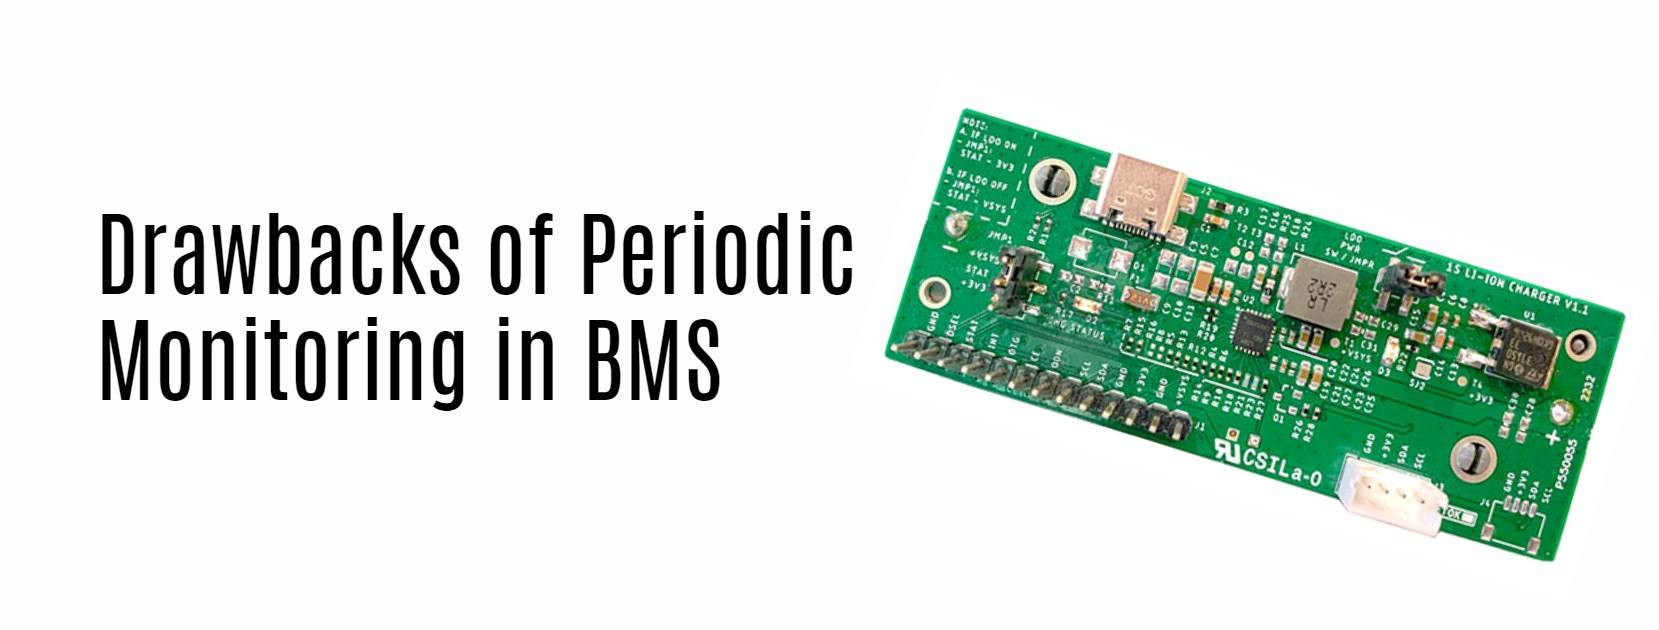 Drawbacks of Periodic Monitoring in BMS